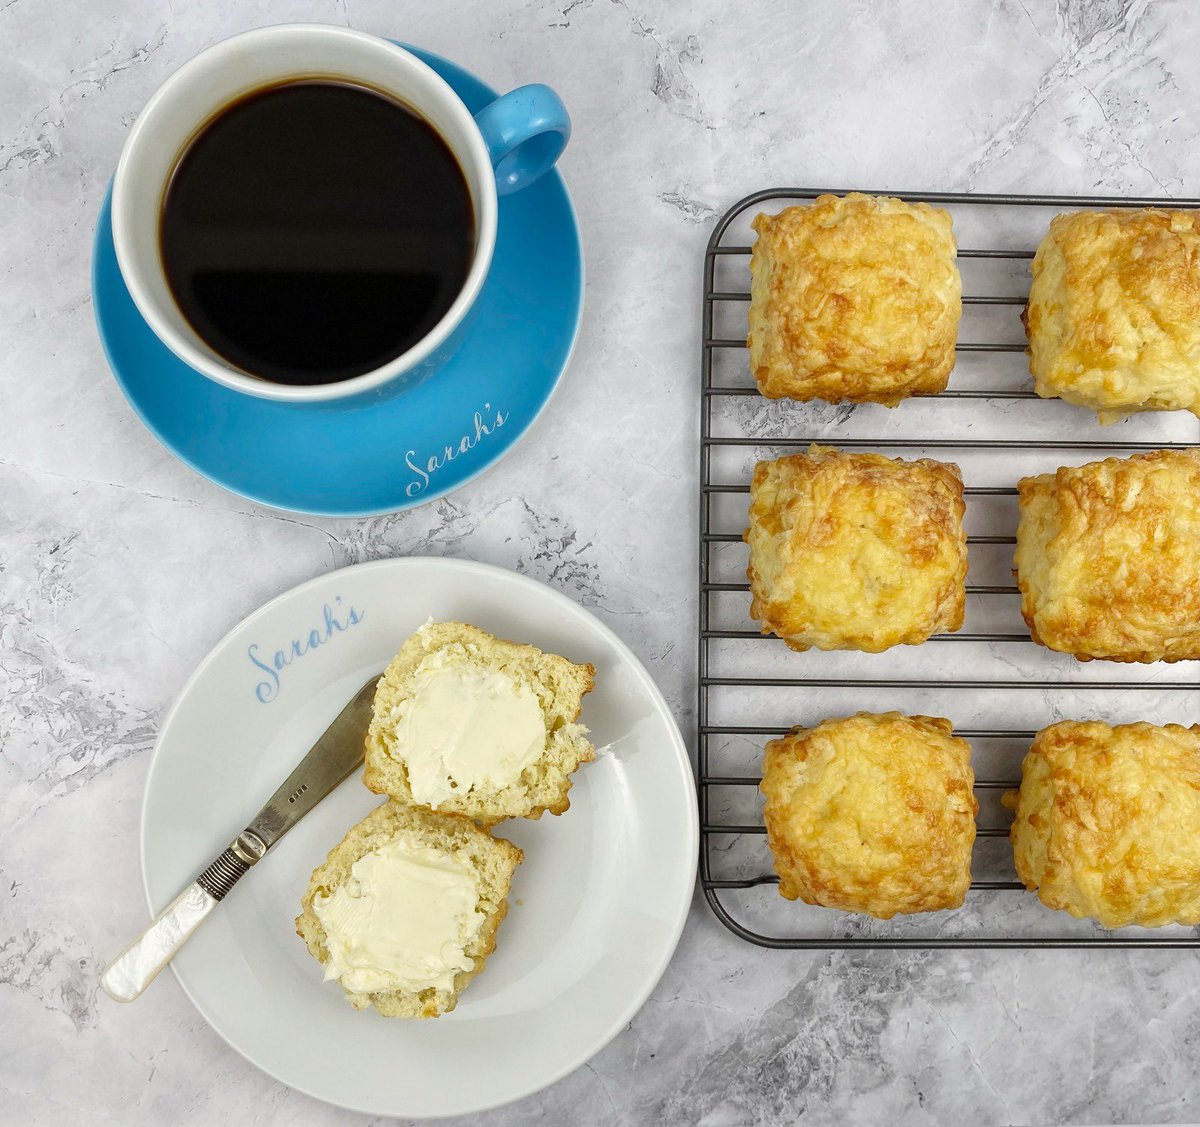 Cheese Scone anyone?
sarahsslice.co.uk/post/sarah-s-c…
#scone #scones #cheesescones #cafe #sarahsslice